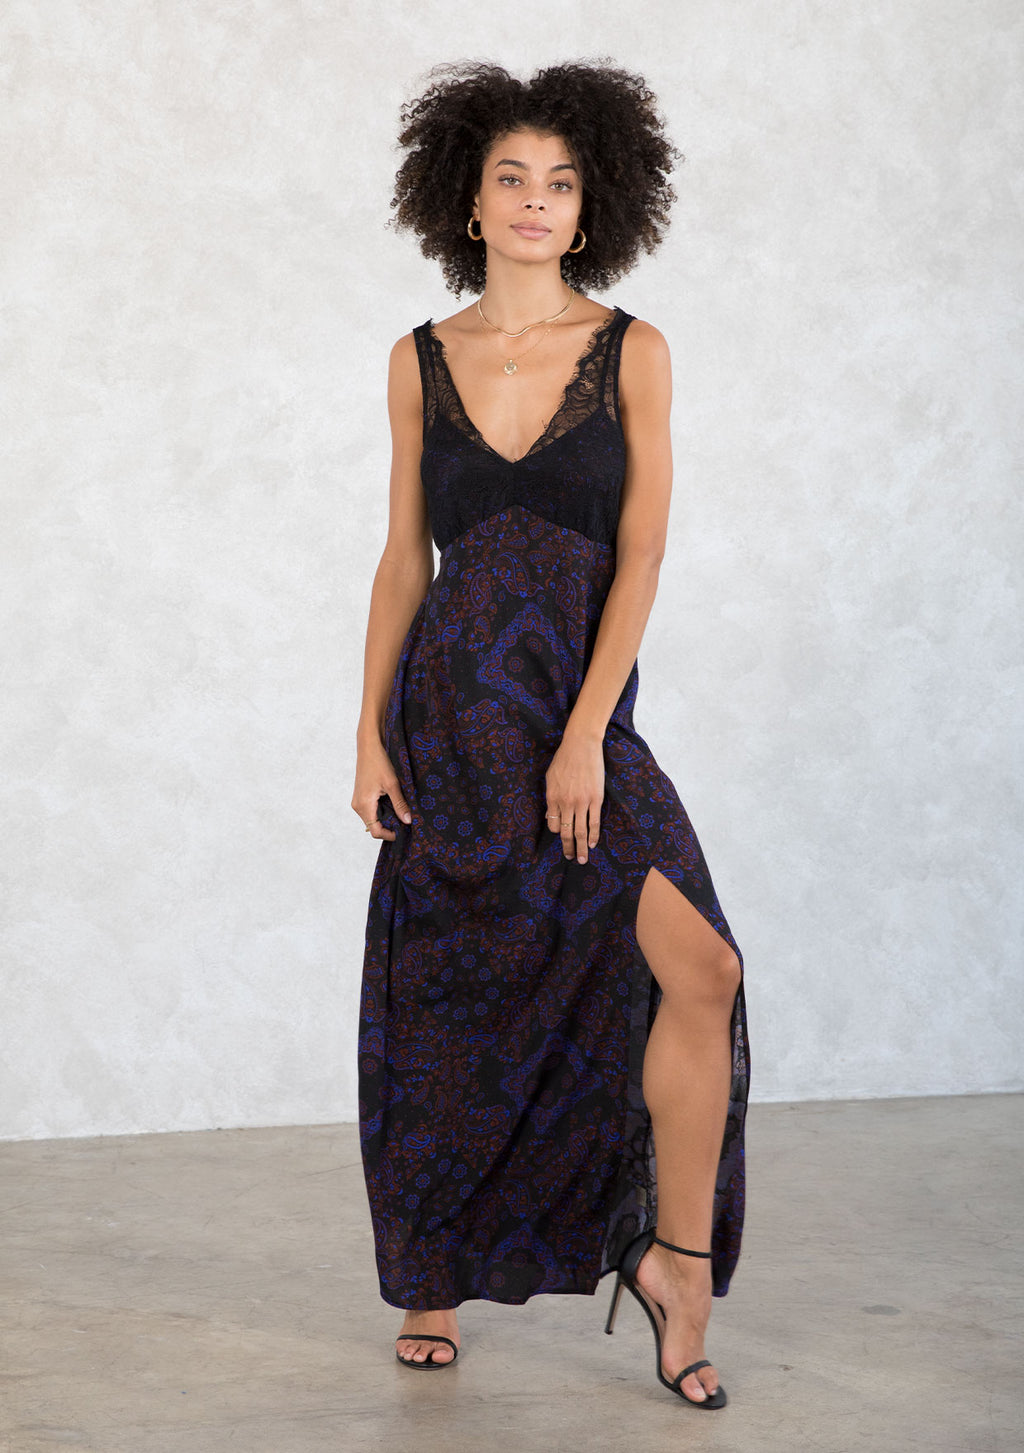 Mini-Length Dress - Lace Overlay / Form Fitting / Spaghetti Straps